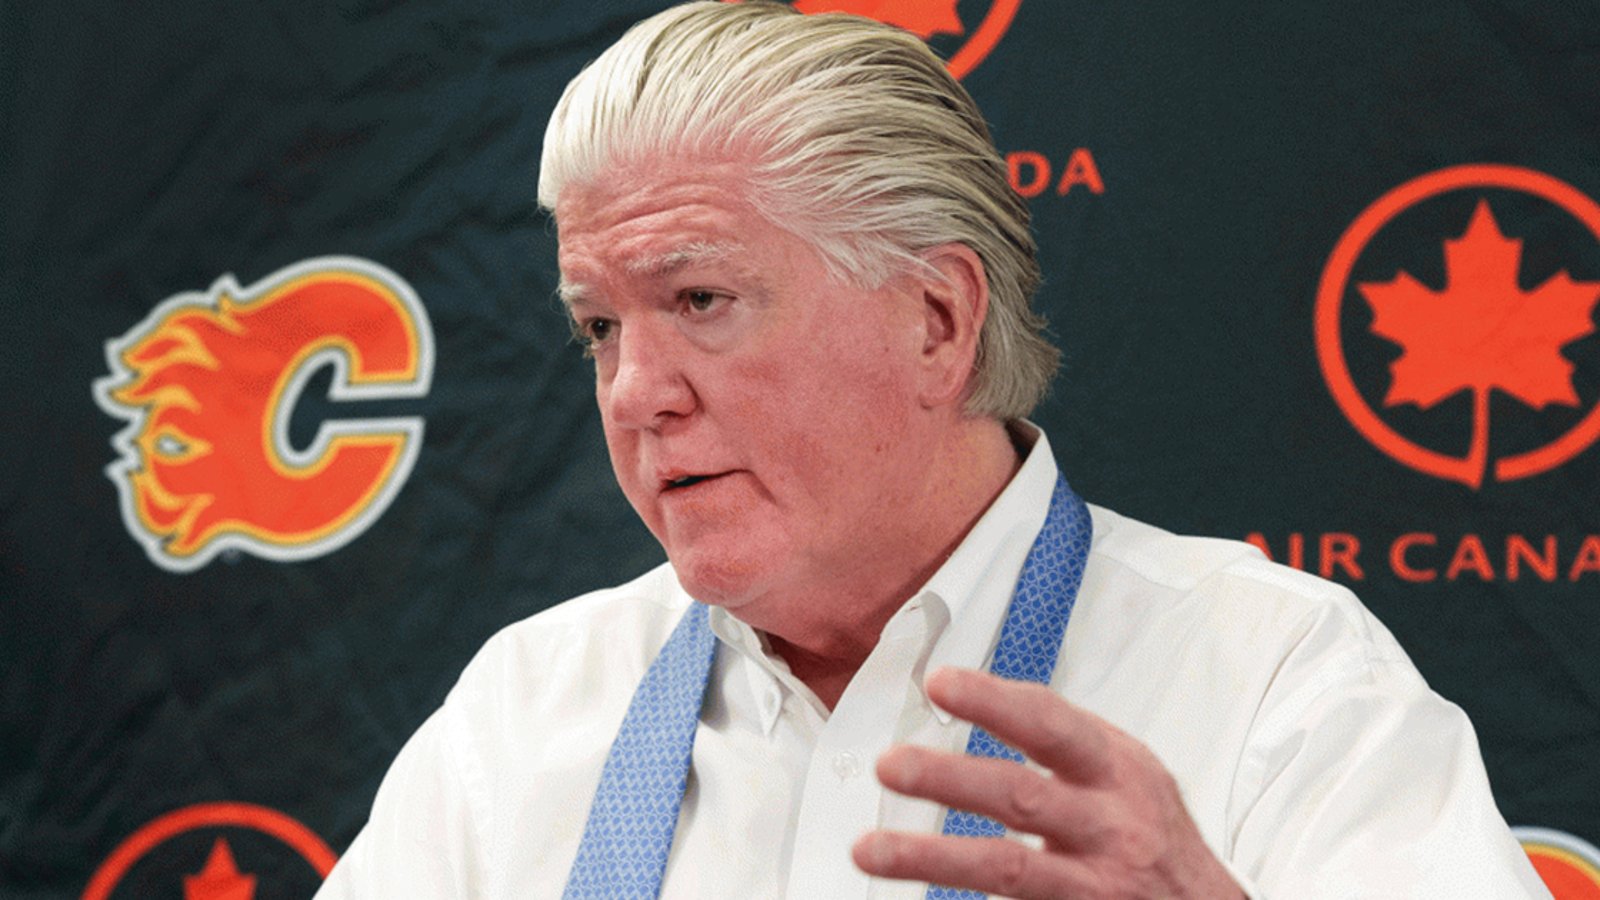 Report: Flames’ Burke publicly slams Leafs